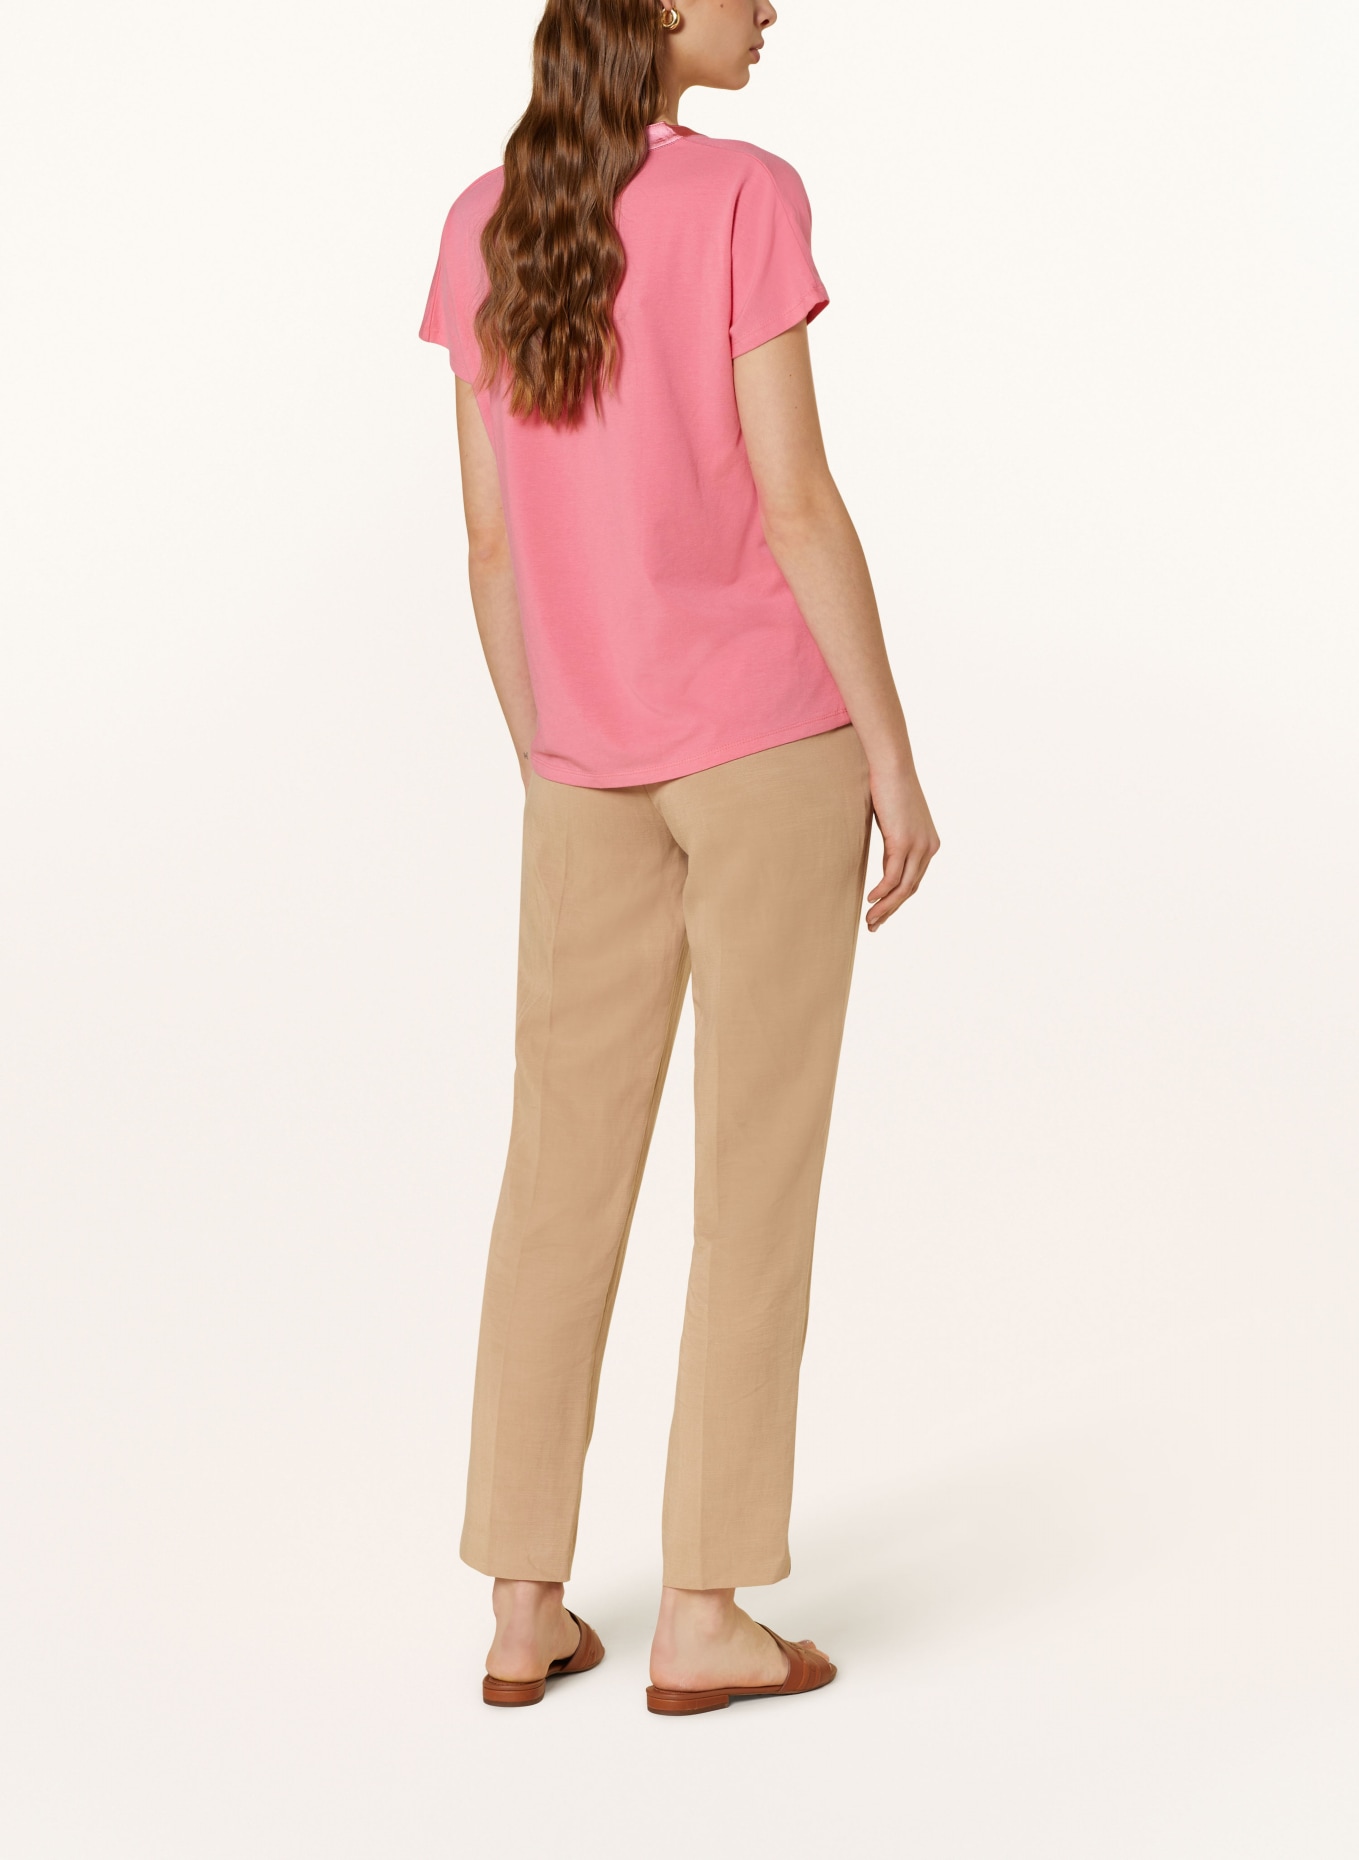 MORE & MORE Blusenshirt, Farbe: 0835 sorbet pink (Bild 3)